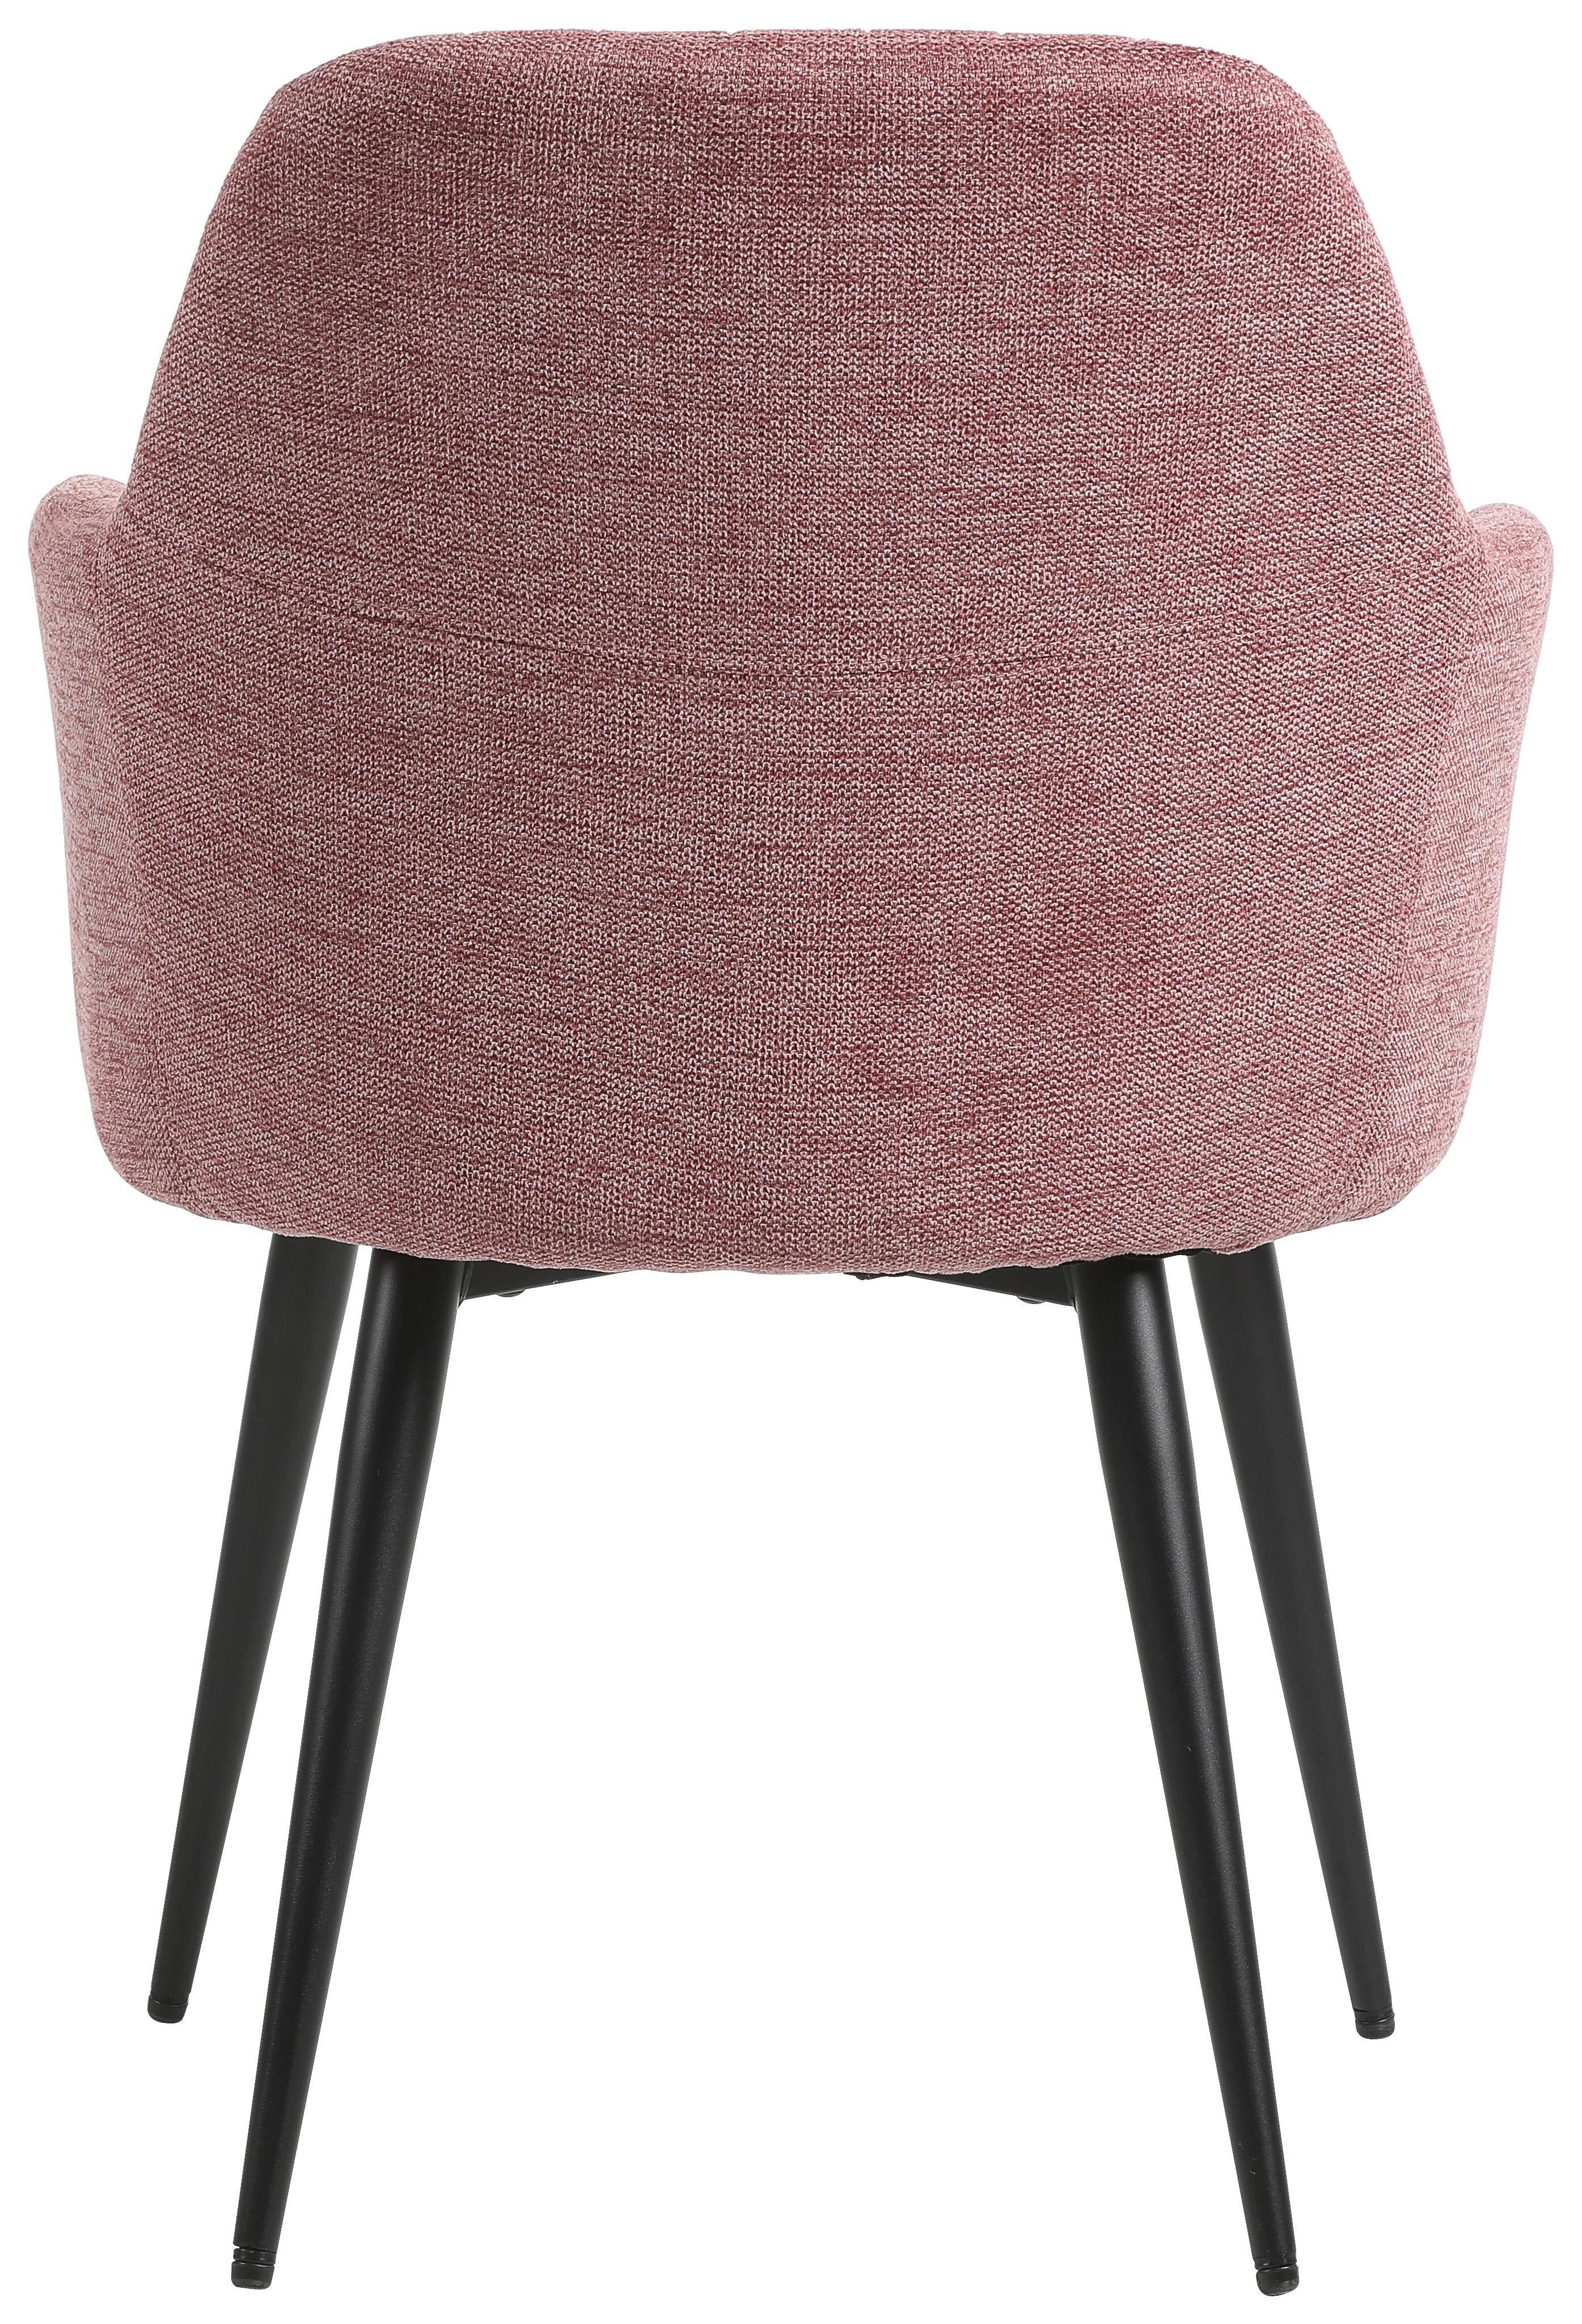 Naslanjač Martha -Based- - roza/črna, Moderno, kovina/tekstil (57/83,5/58cm) - Based